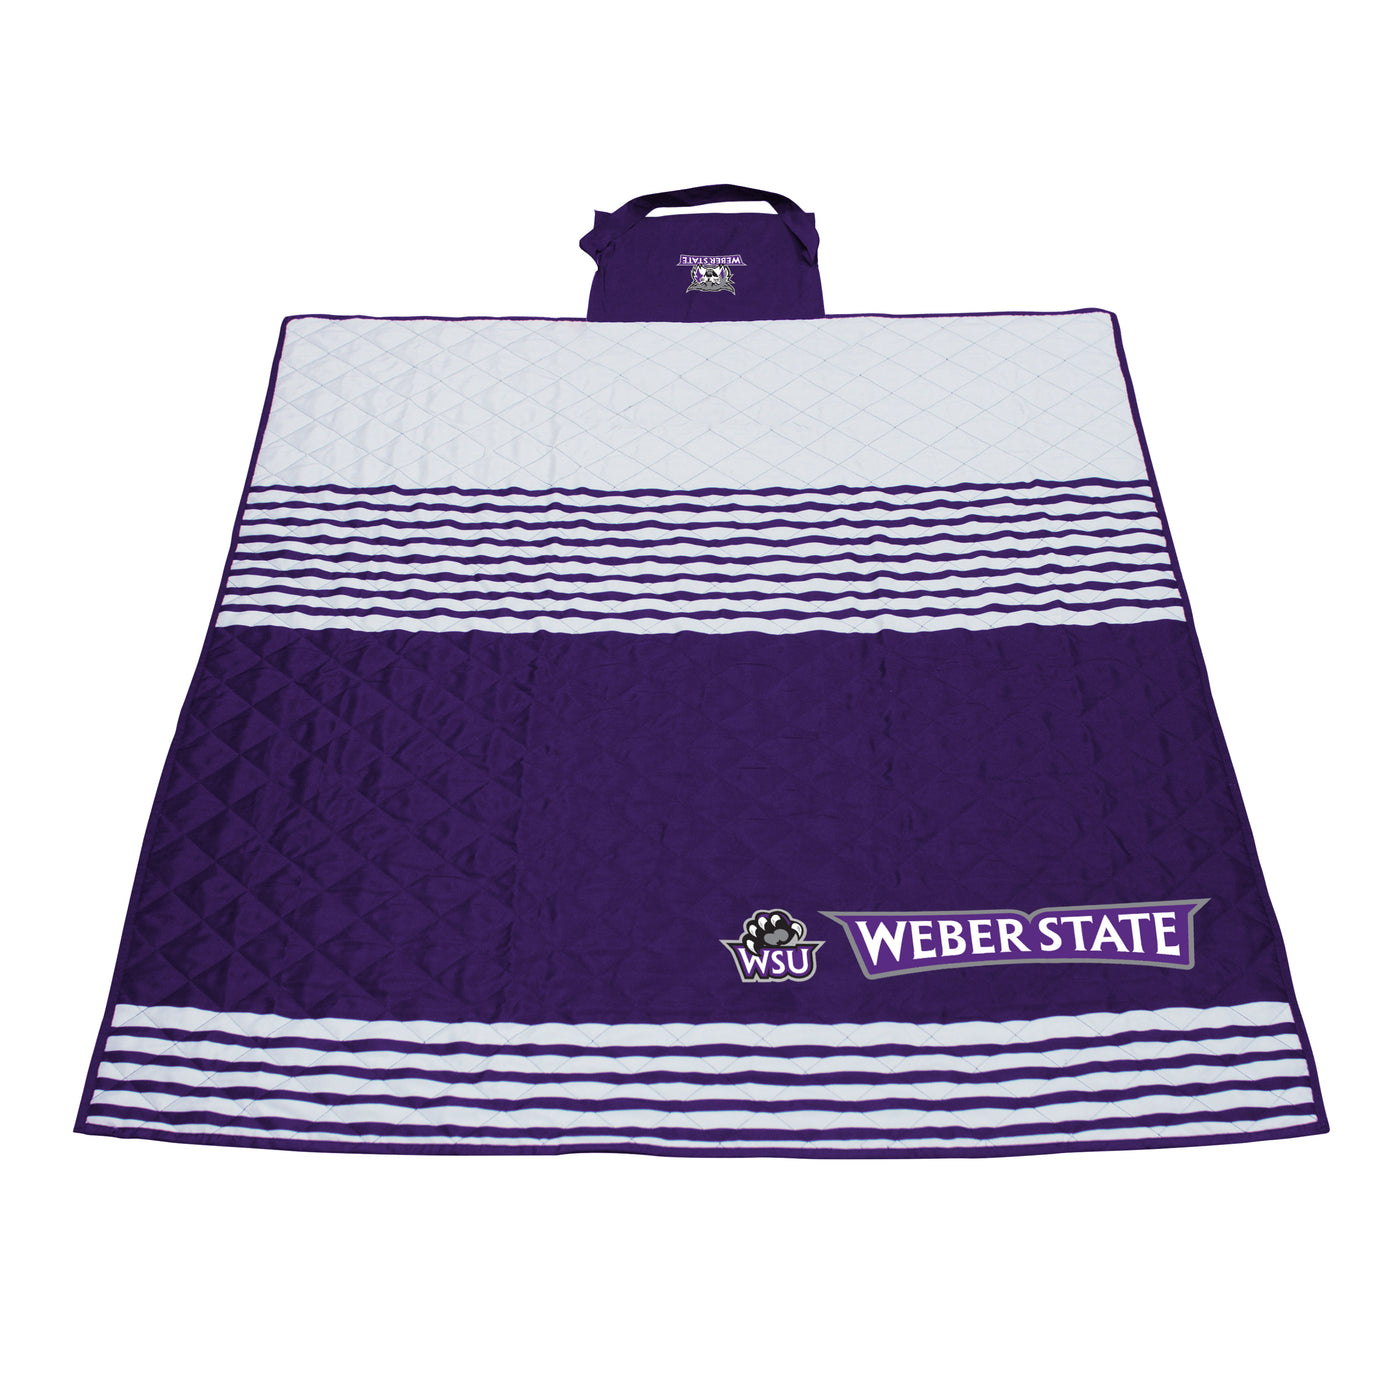 Weber State Outdoor Blanket